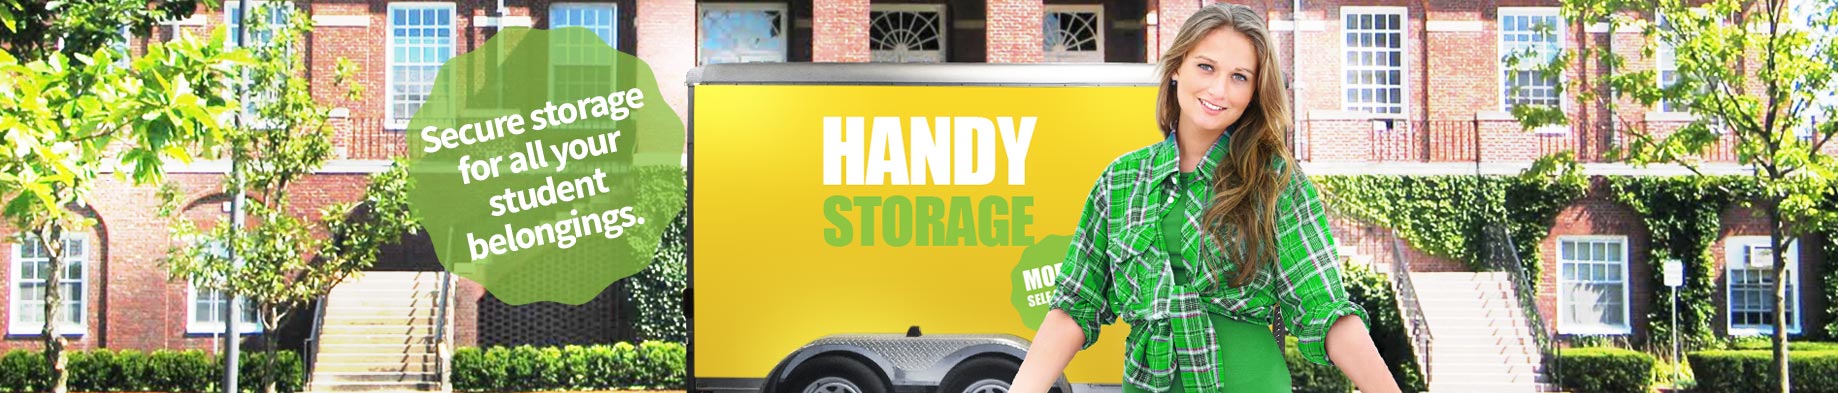 Handy Mobile Storage Ltd.